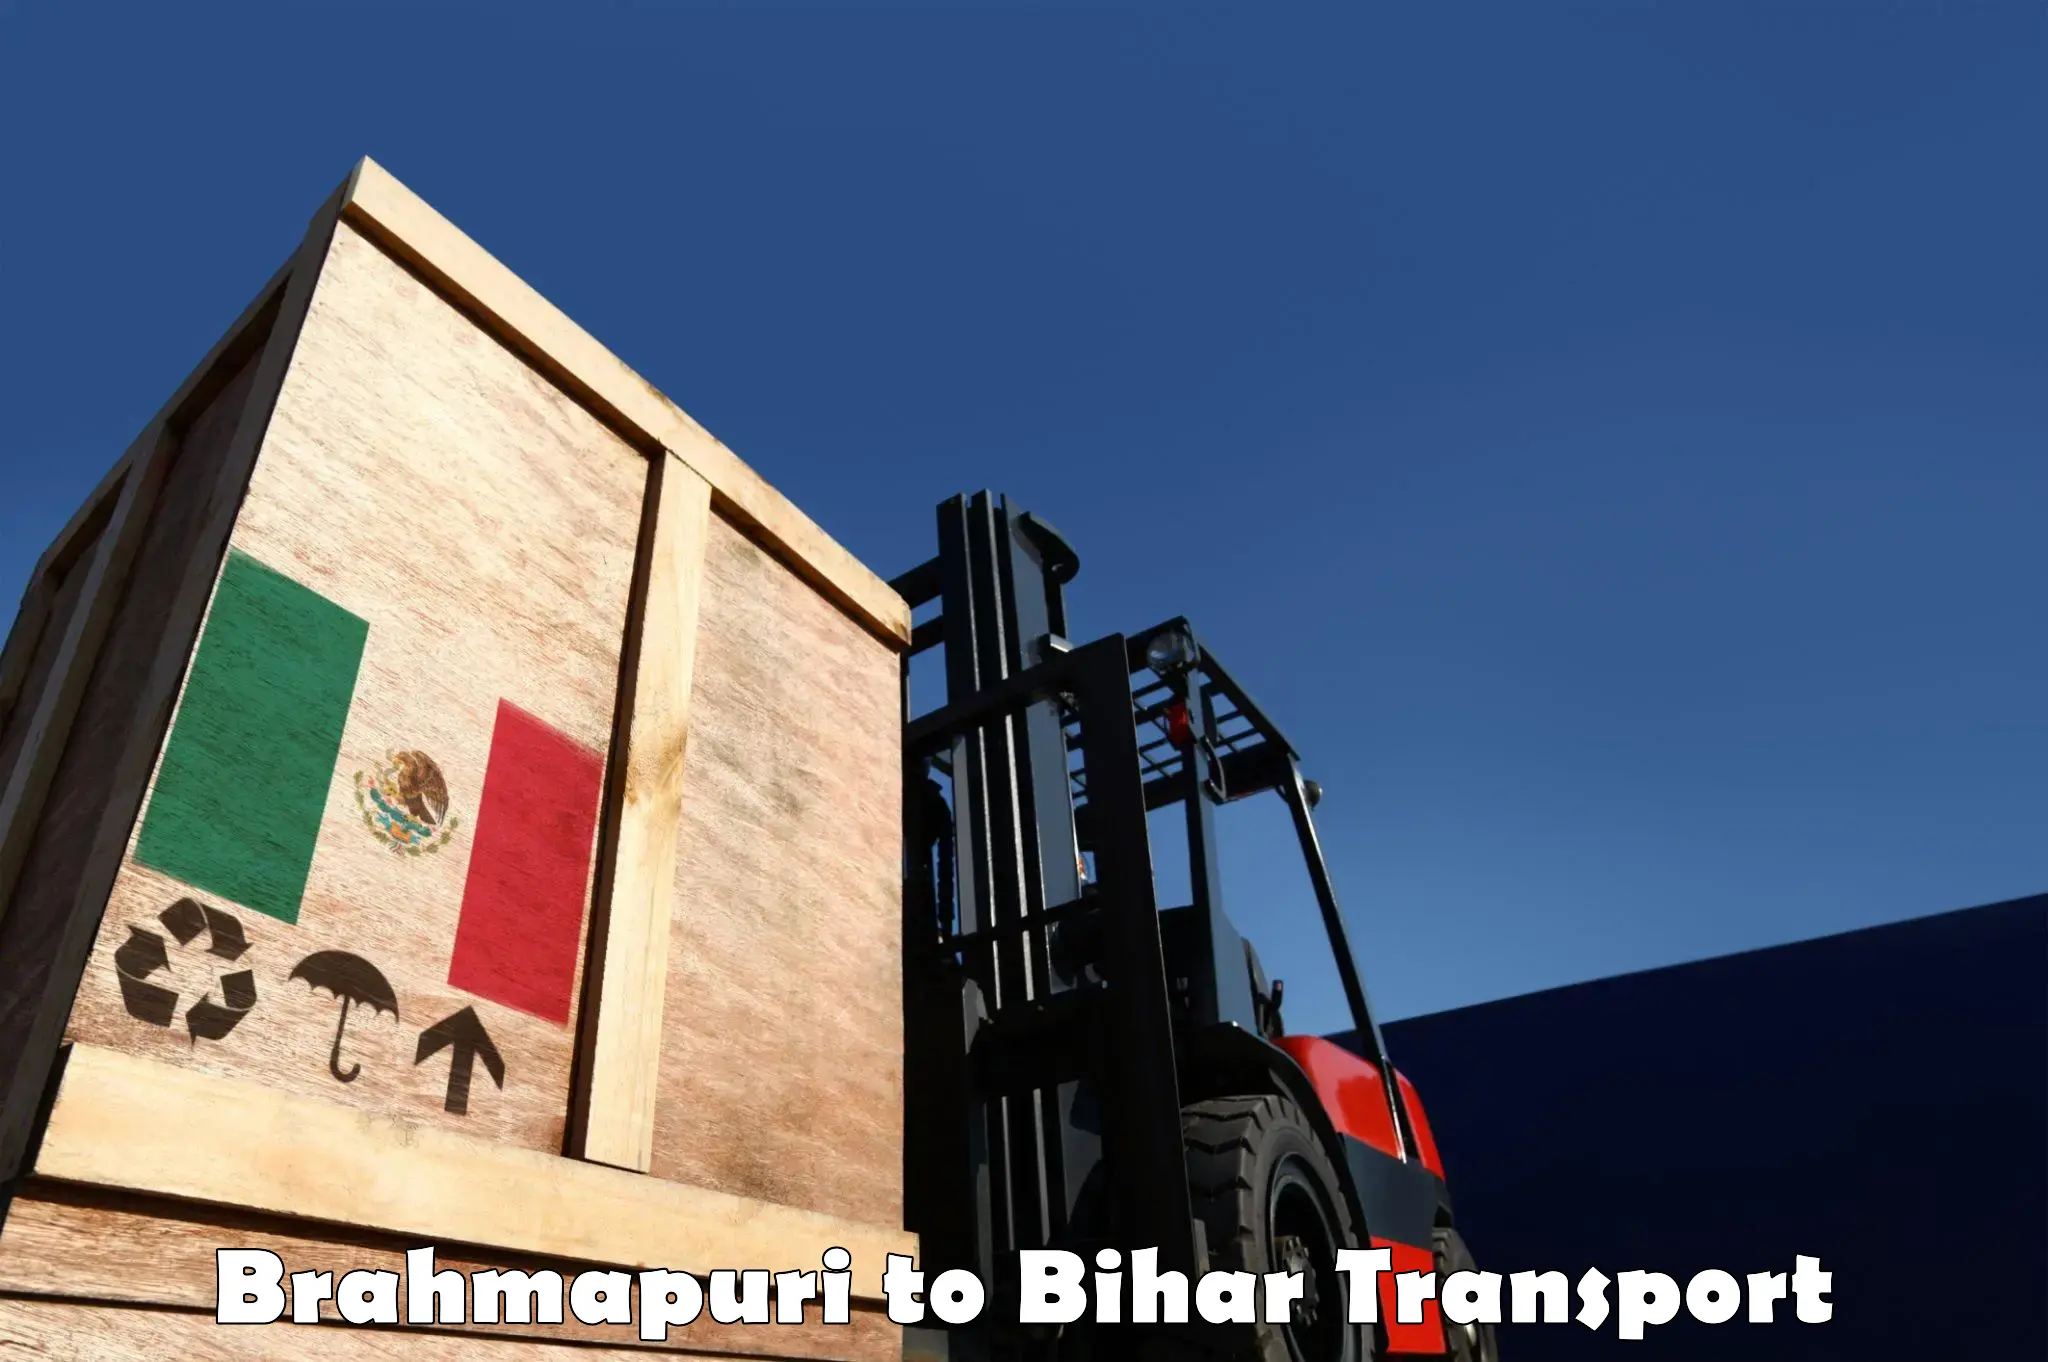 Transport bike from one state to another Brahmapuri to Bharwara